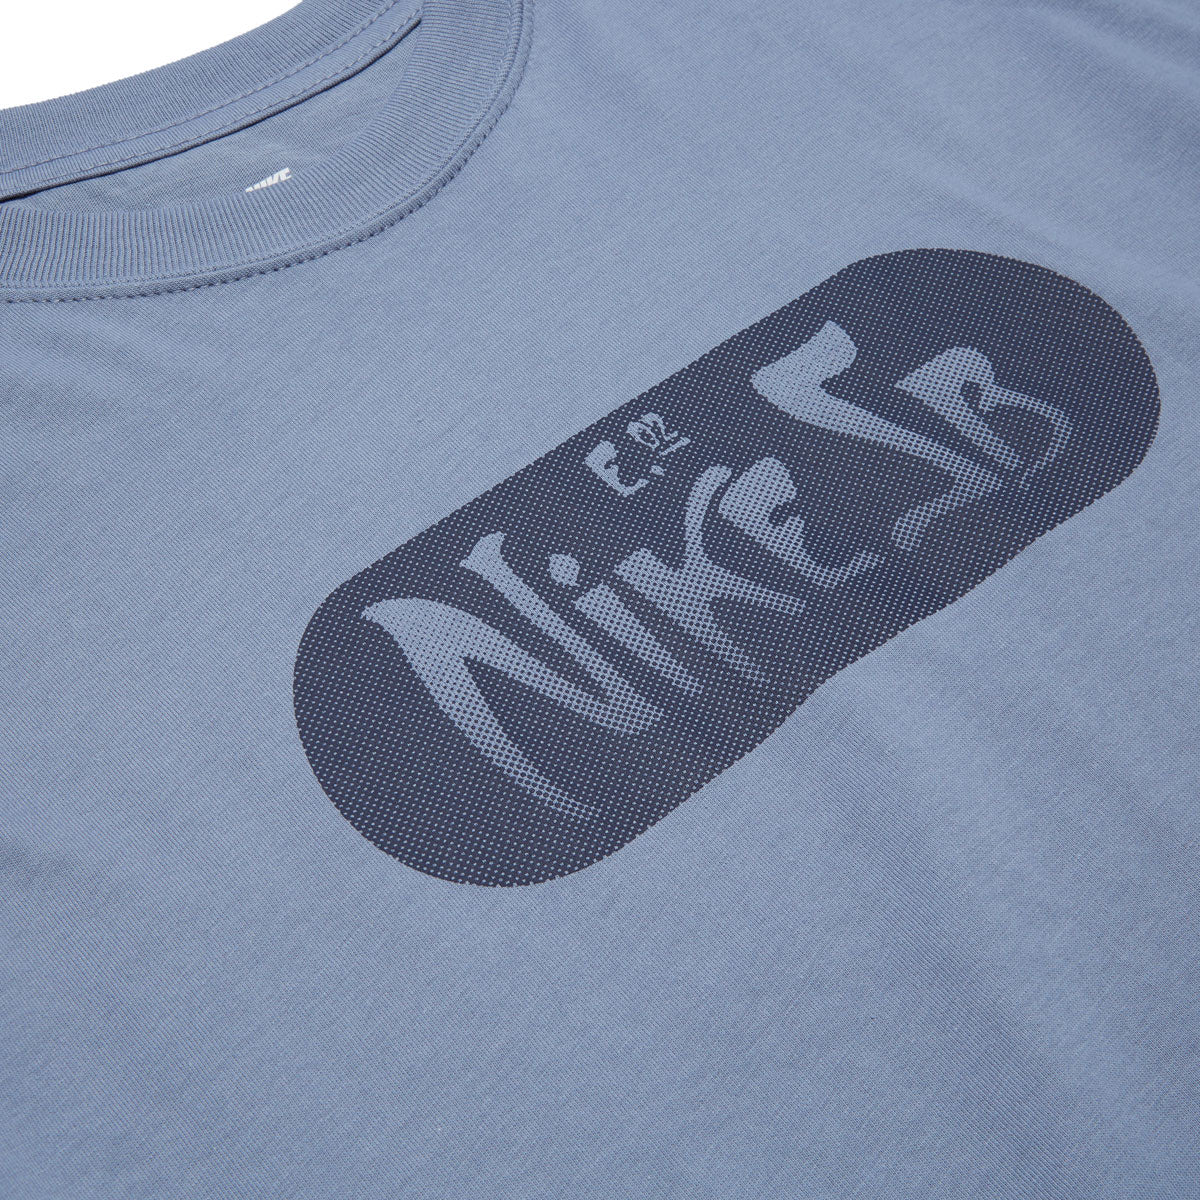 Nike SB Drip Long Sleeve T-Shirt - Ashen Slate image 2